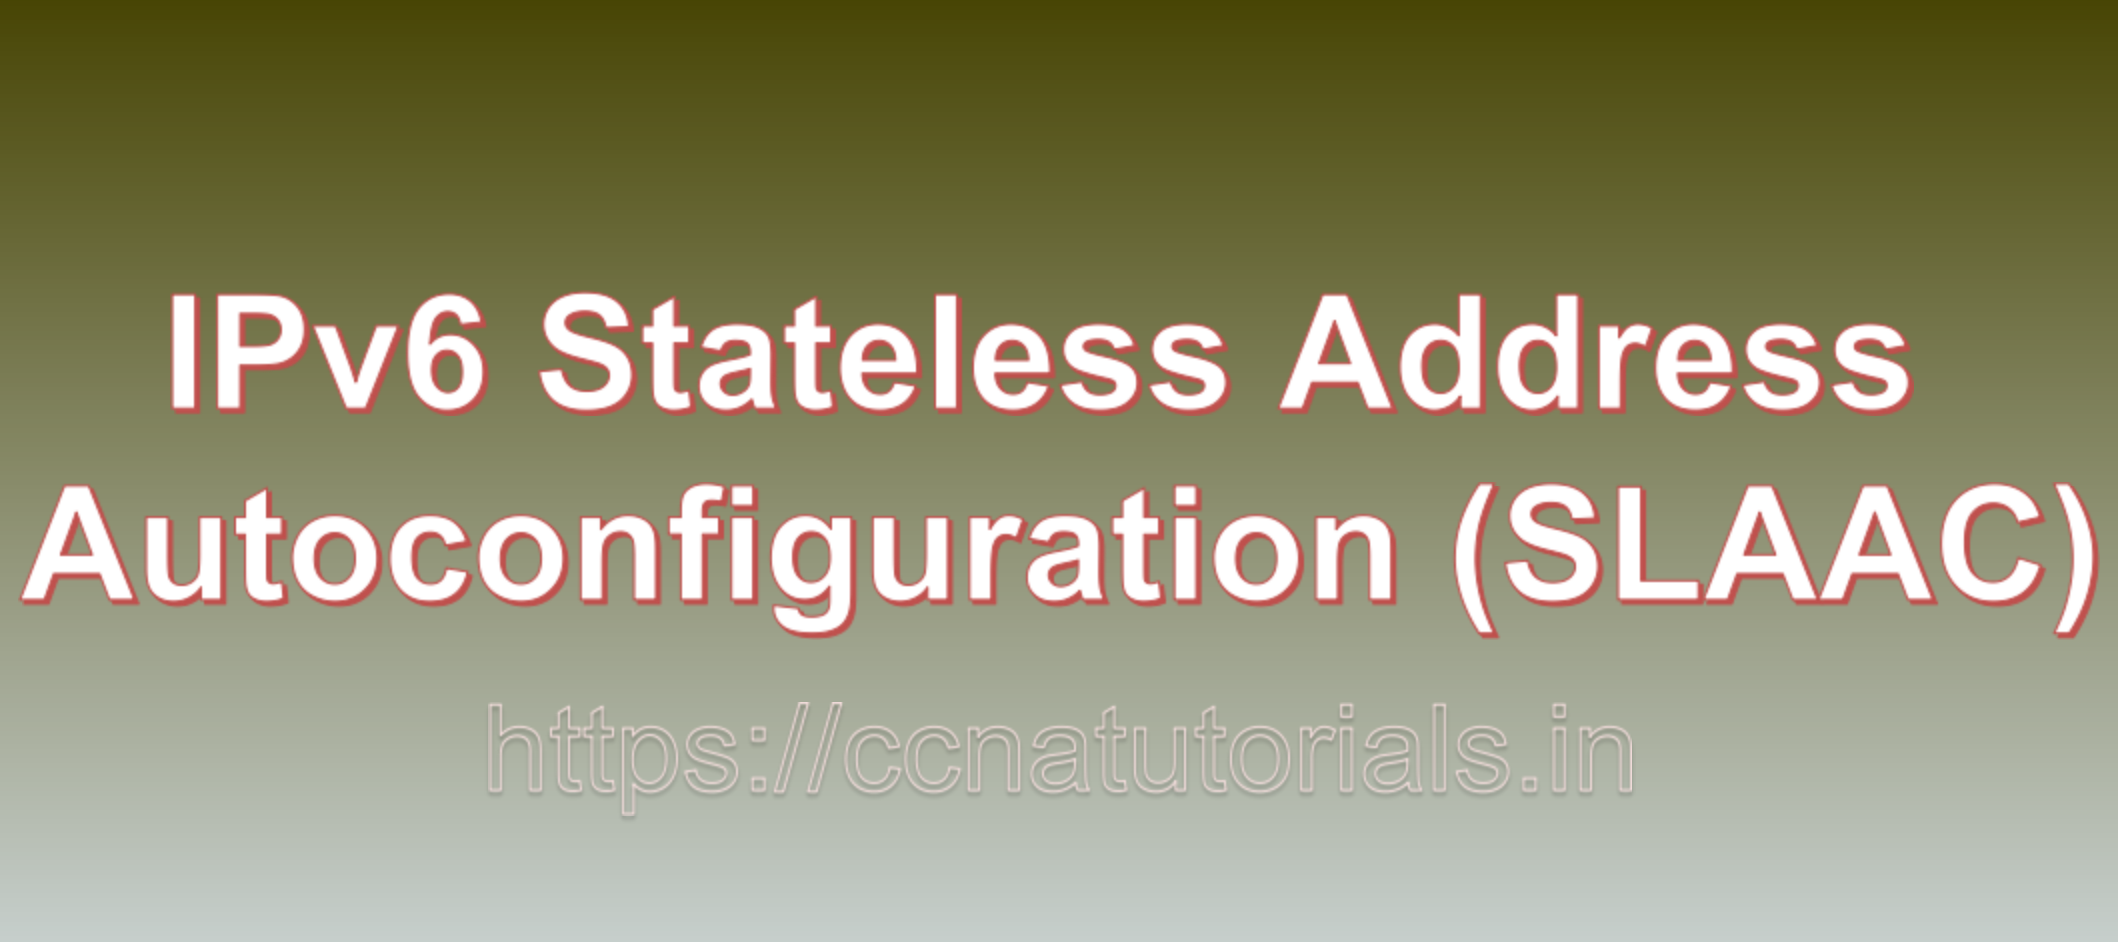 IPv6 Stateless Address Autoconfiguration (SLAAC), ccna, CCNA TUTORIALS